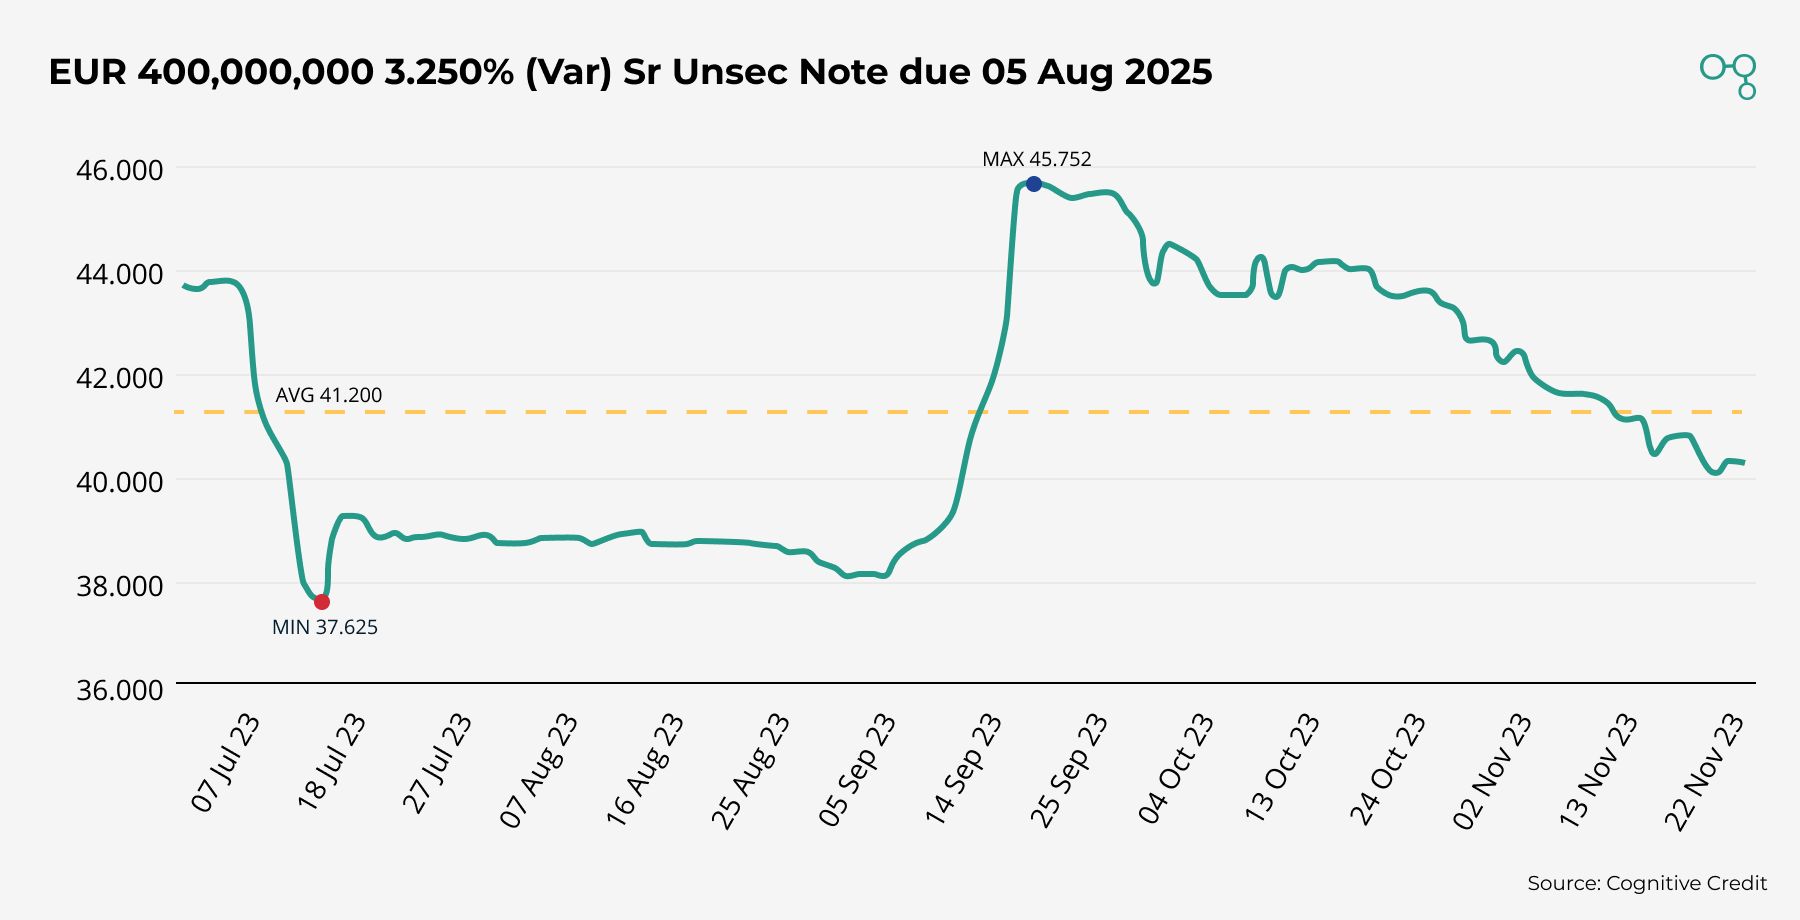 EUR 400,000,000 3.250% (Var) Sr Unsec Note due 05 Aug 2025 | Cognitive Credit